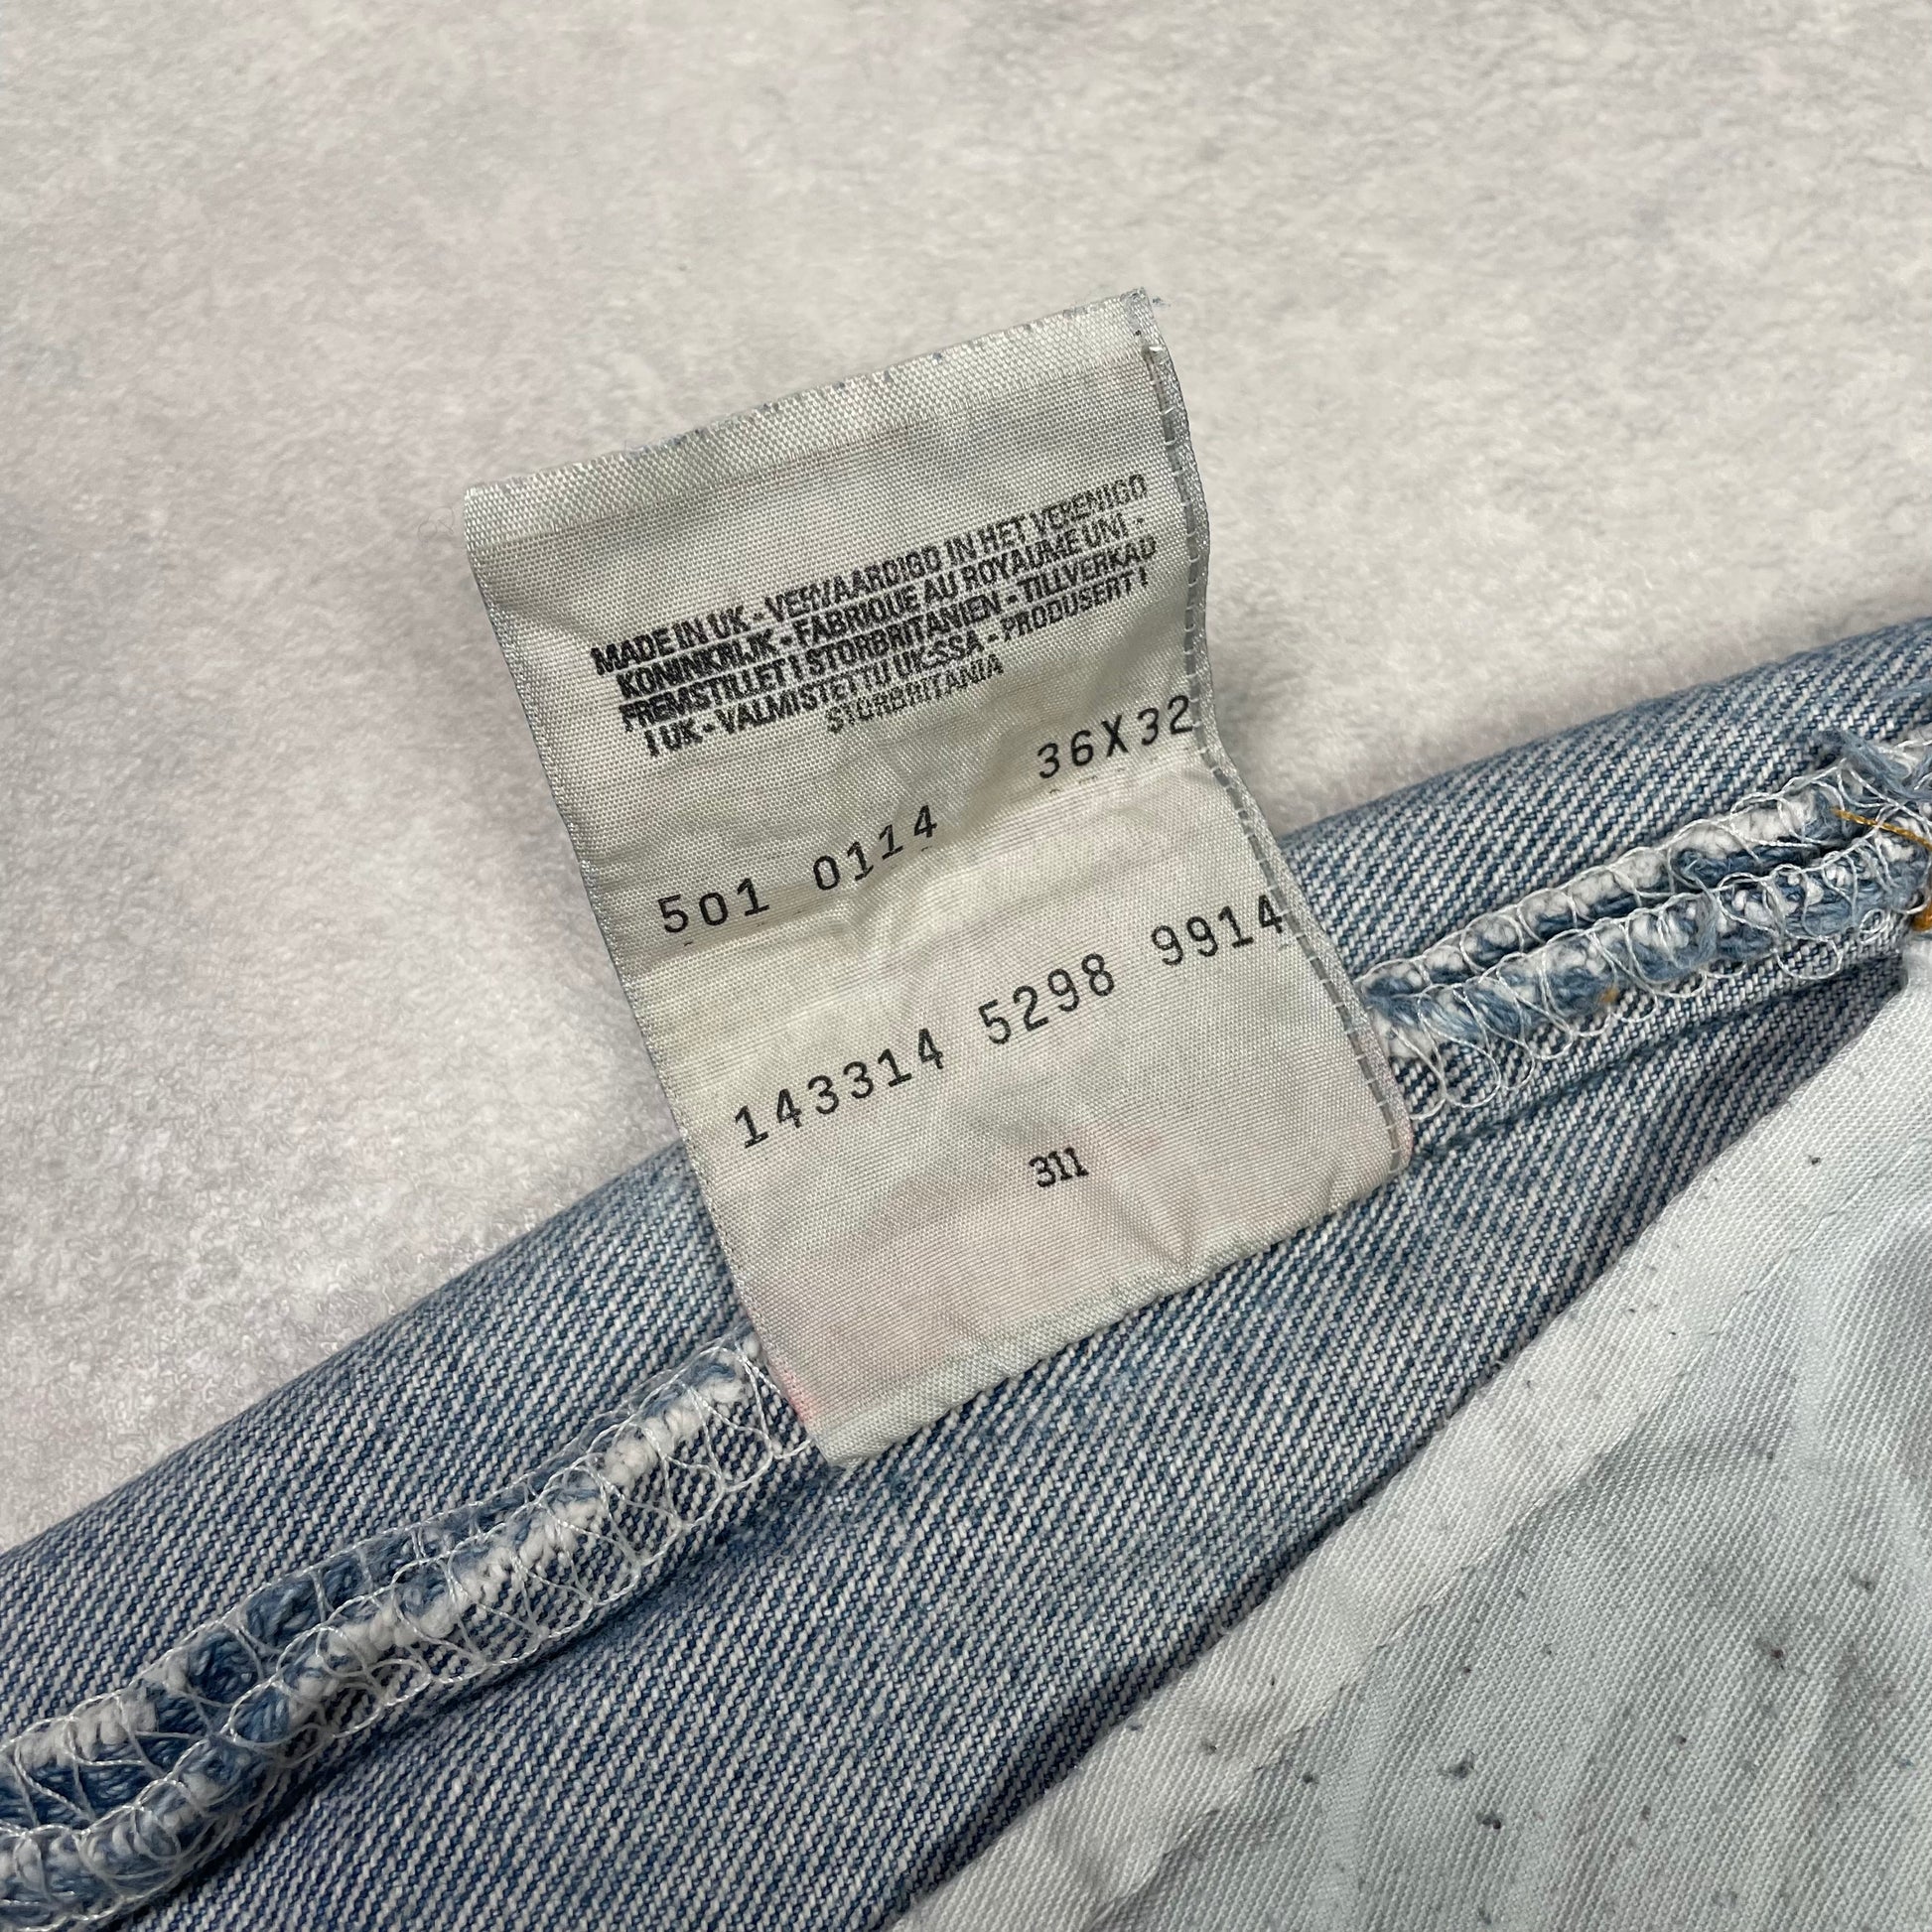 Embankment Erhvervelse manifestation Vintage Levi's 501 Jeans Paint Stained Made in UK – The Mean Vintage Club